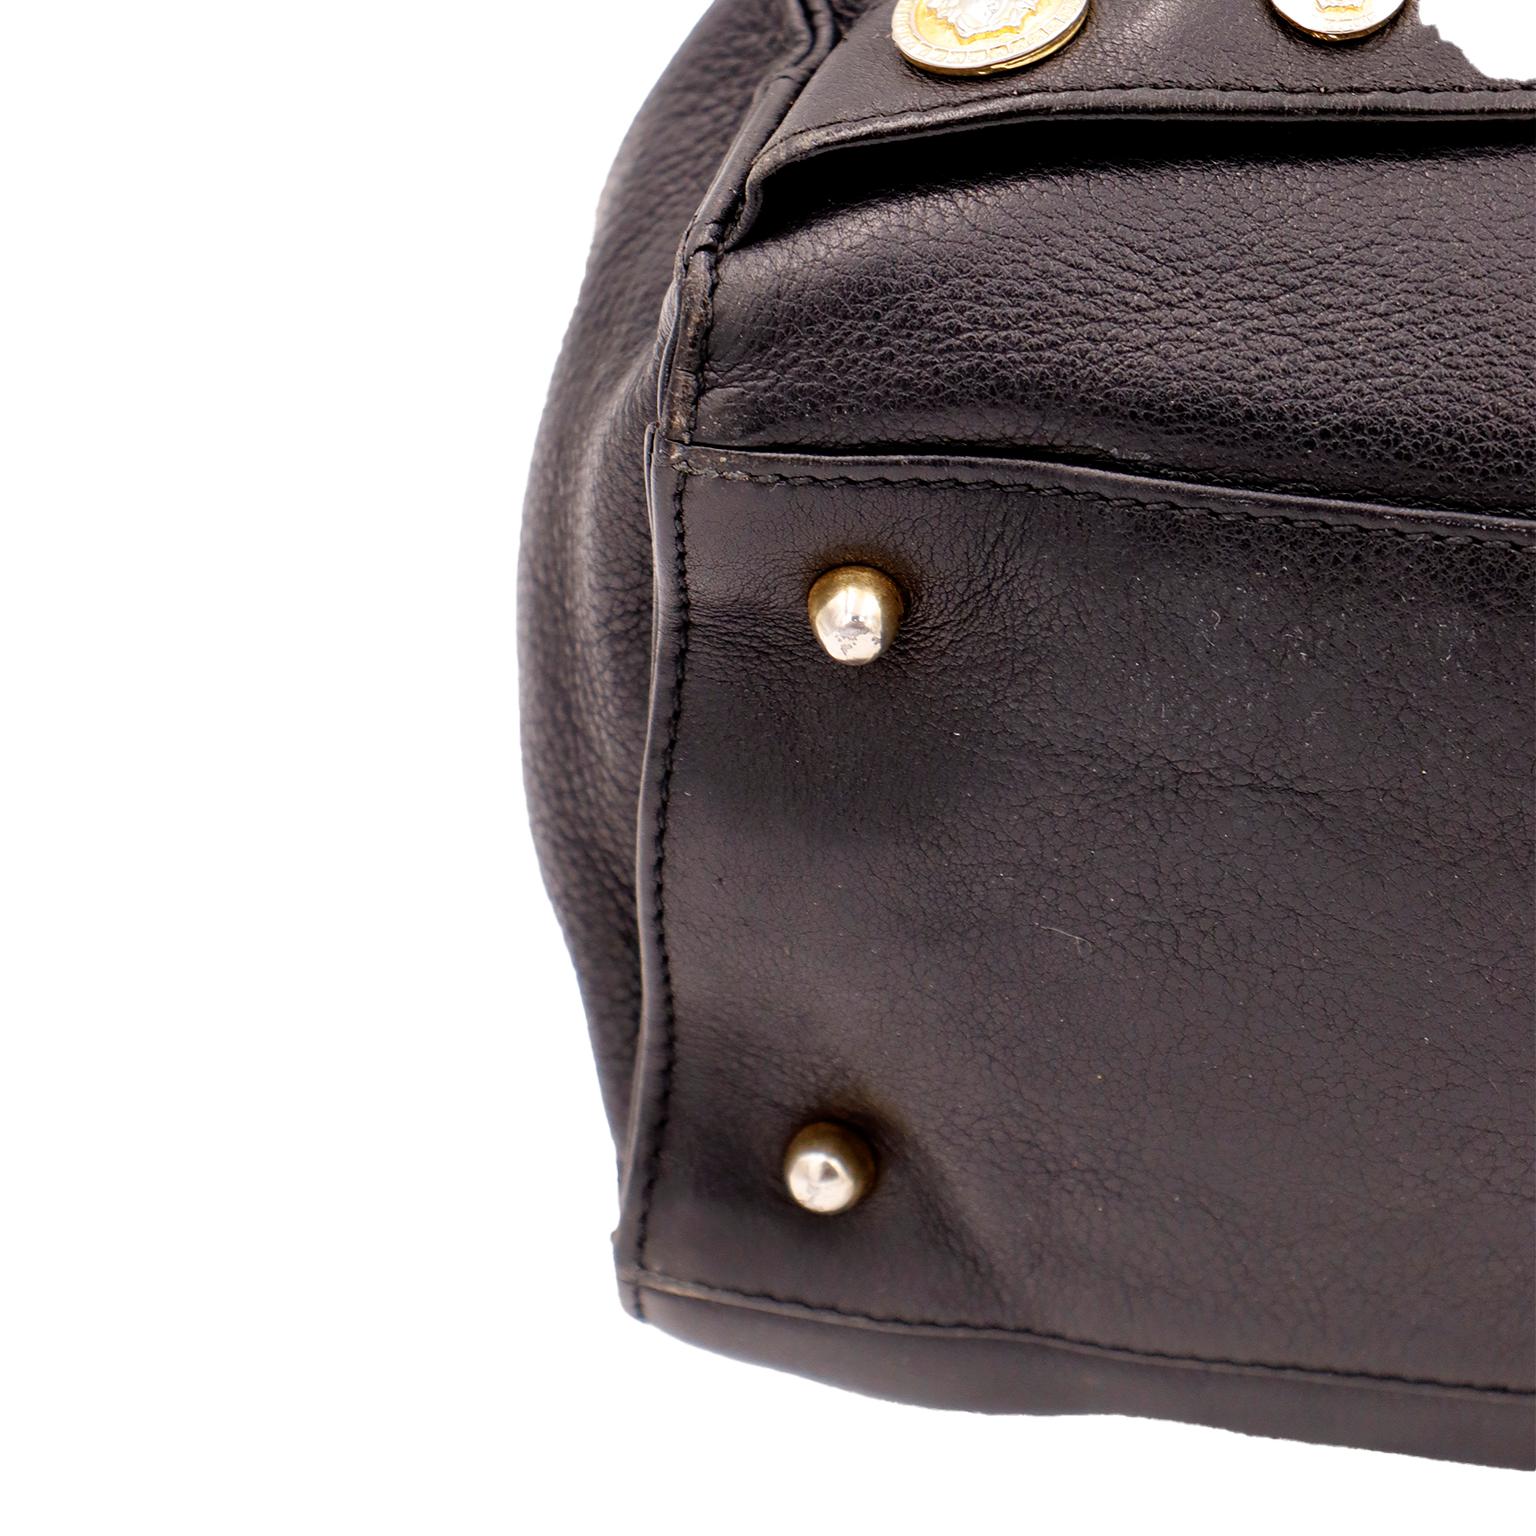 Gianni Versace 1992 Medusa Bondage Black Leather Top Handle Satchel Handbag 4